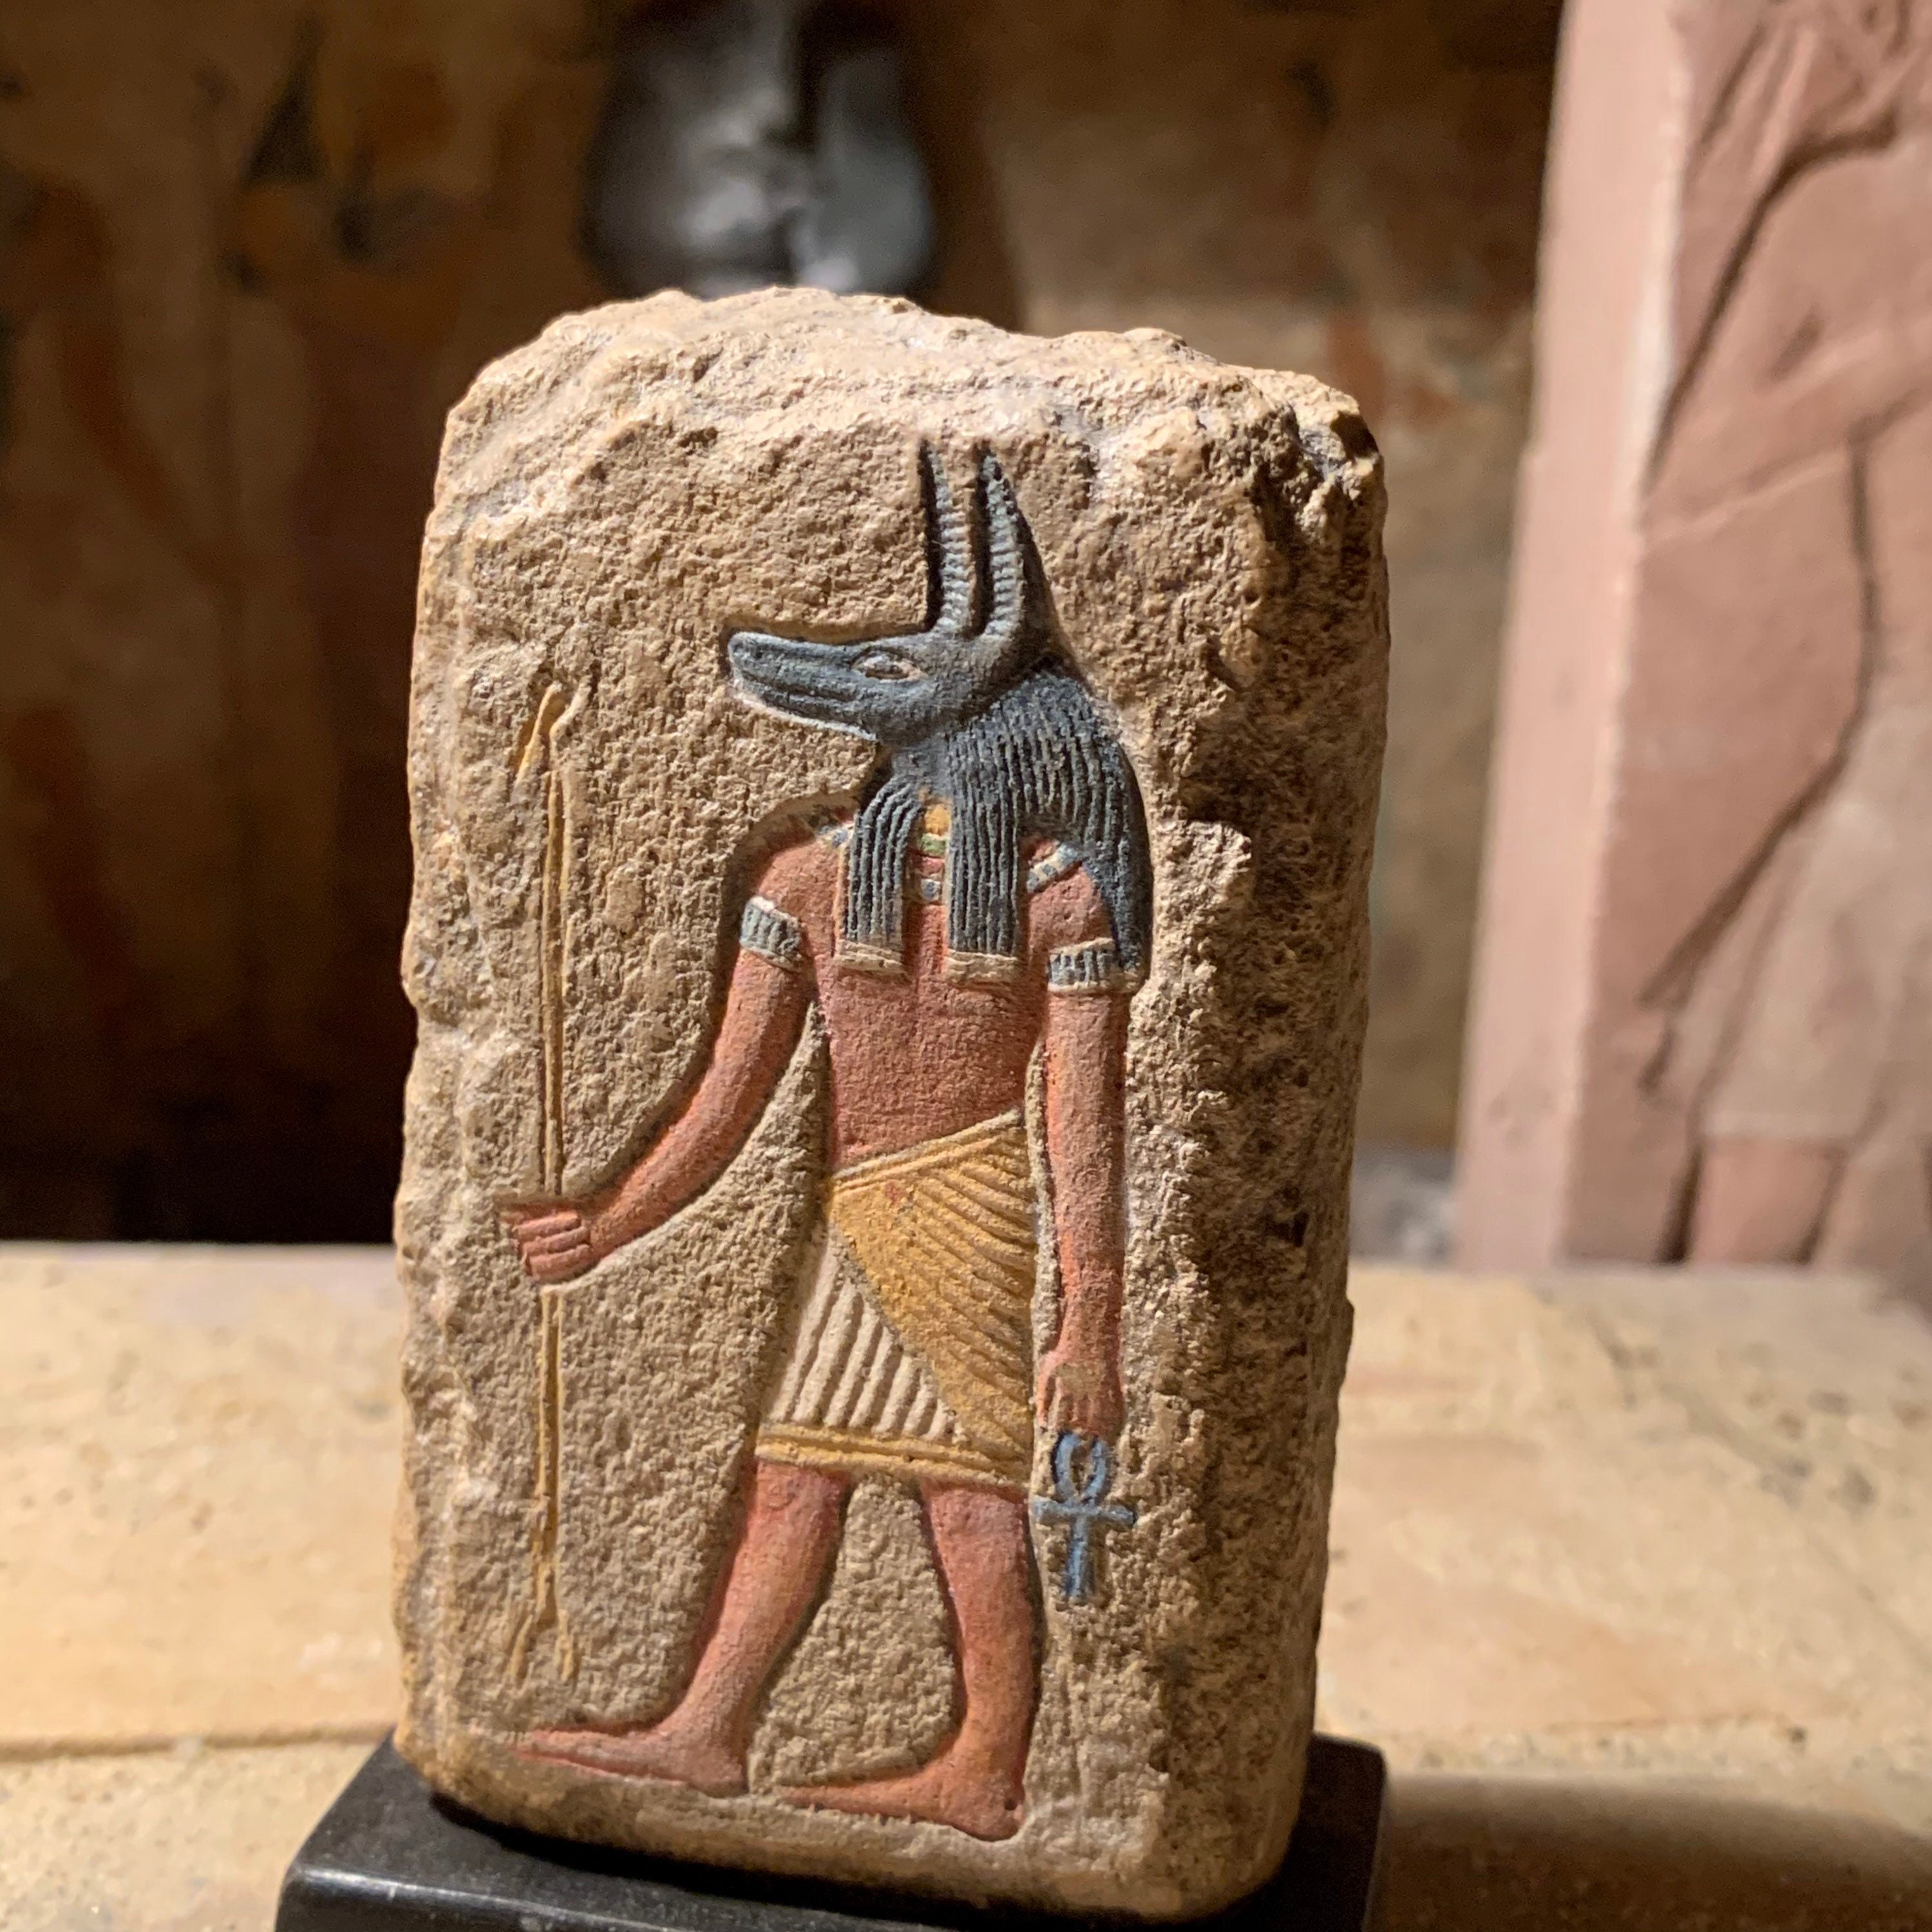 Egyptian Art Anubis A Relief Sculpture Of The Ancient Mummification